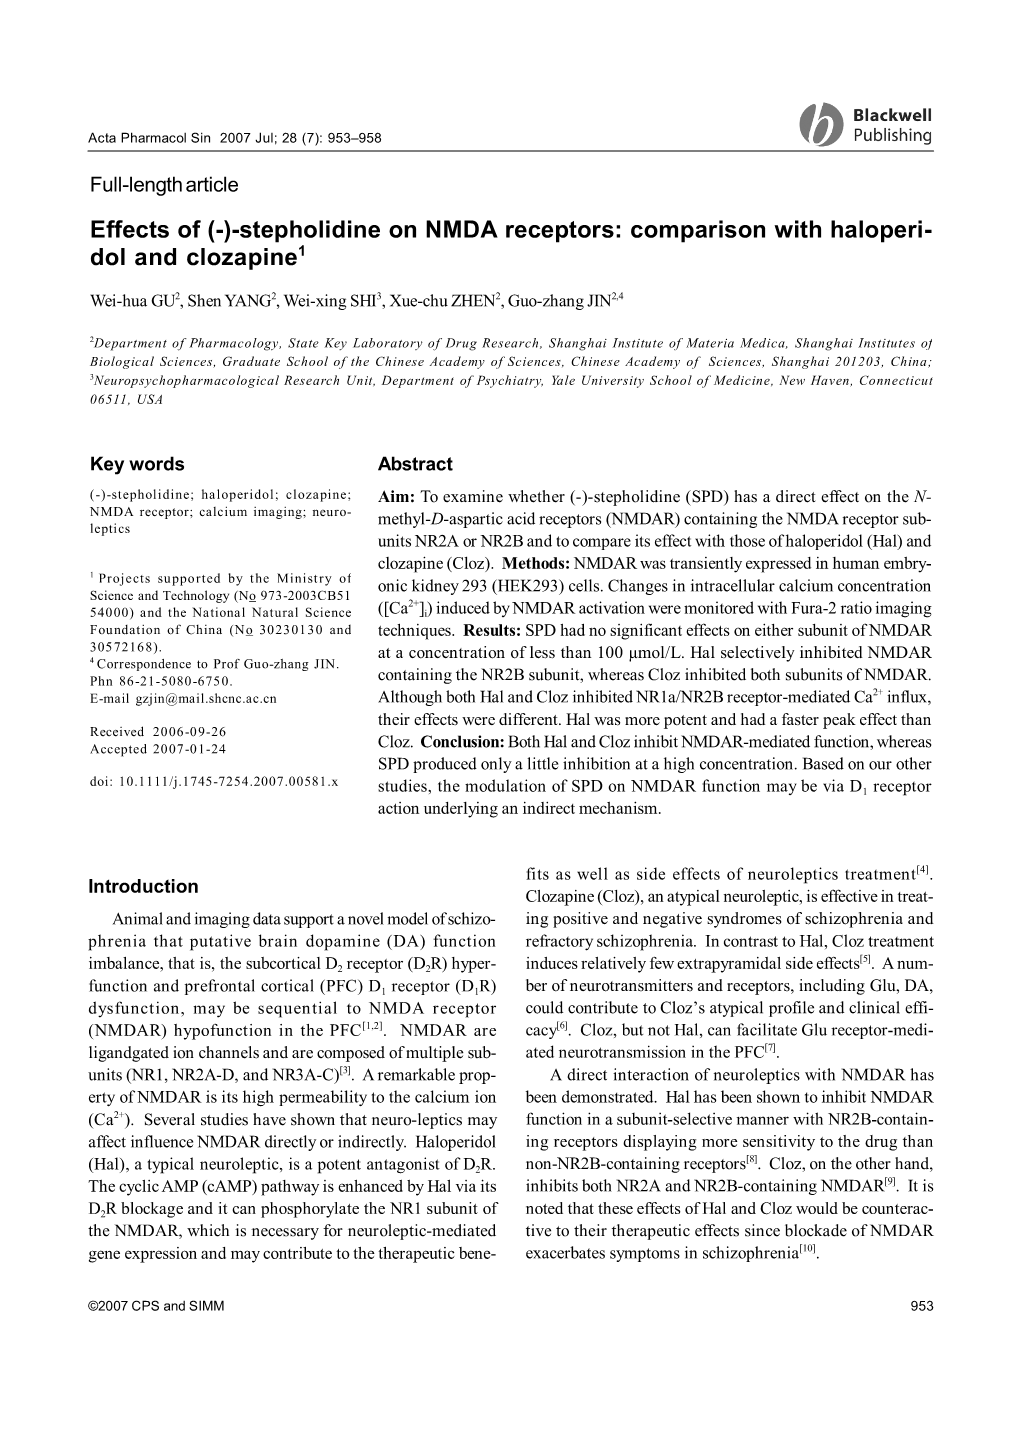 Stepholidine on NMDA Receptors: Comparison with Haloperi- Dol and Clozapine1